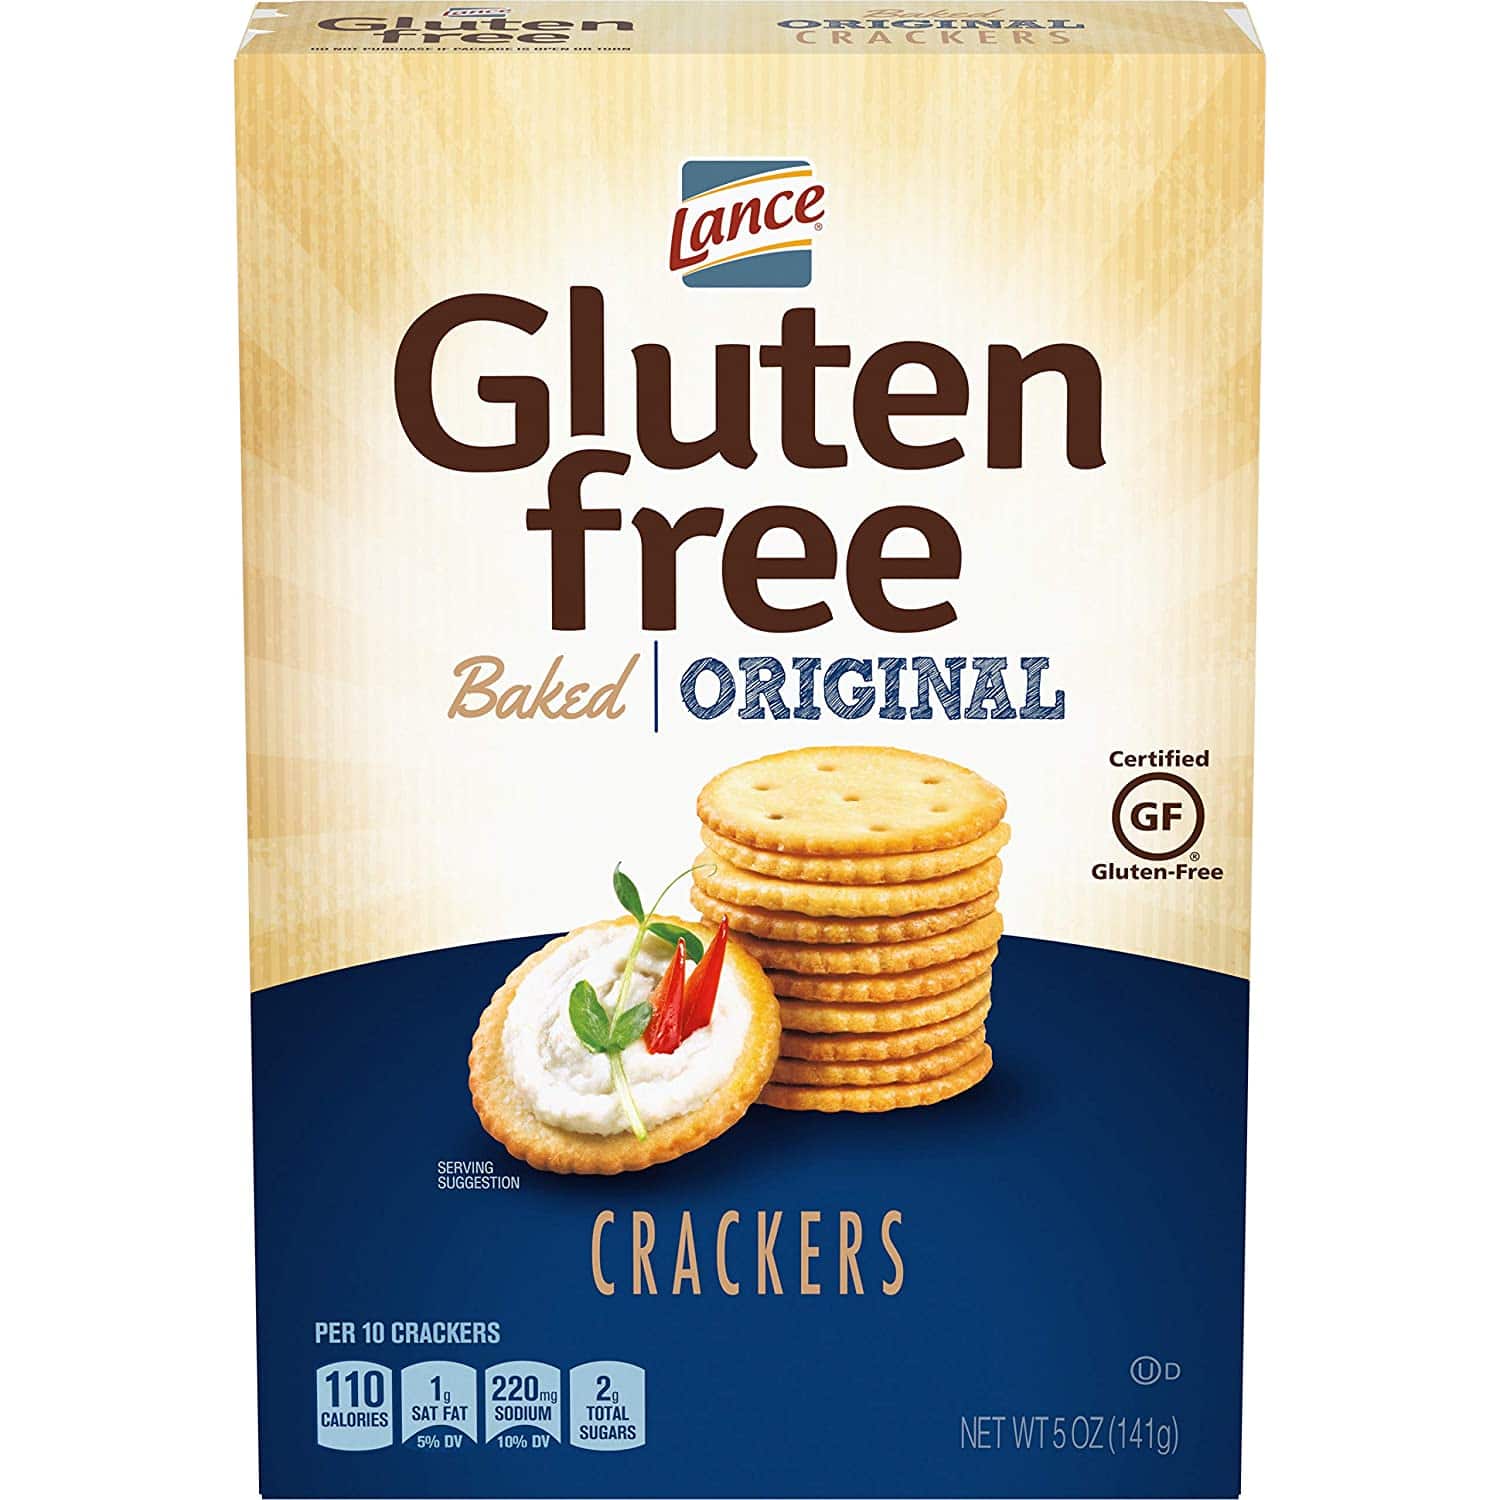 2. Lance Gluten Free Crackers